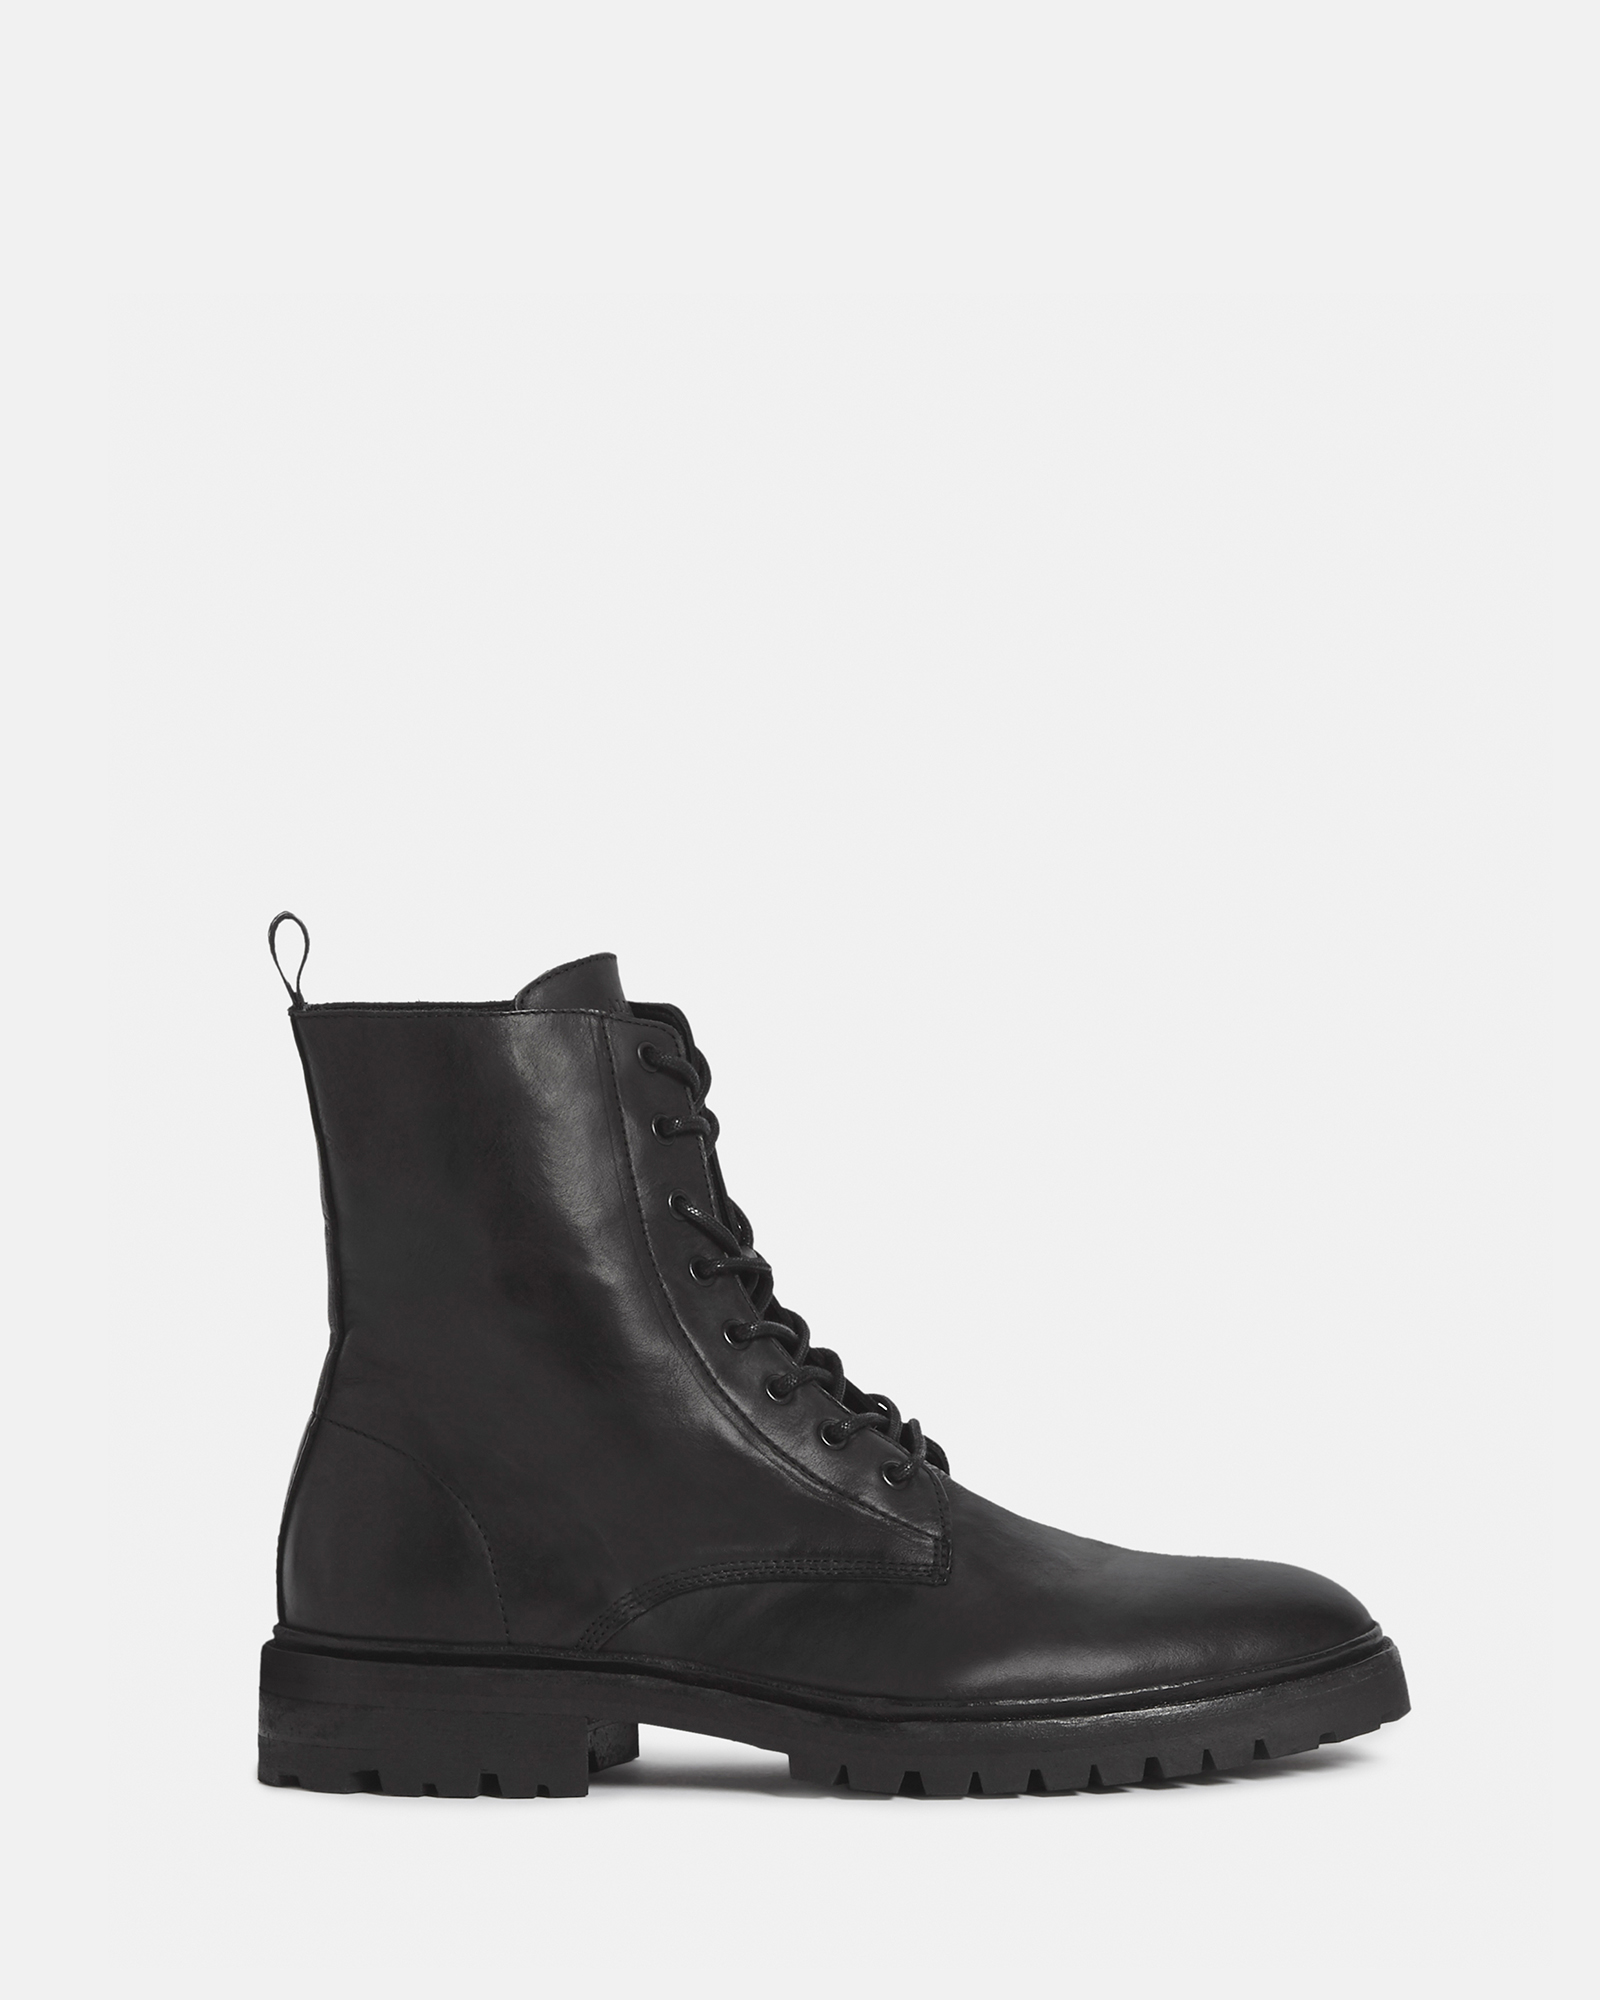 AllSaints Men's Leather Classic Smooth Tobias Boots, Black, Size: UK 11